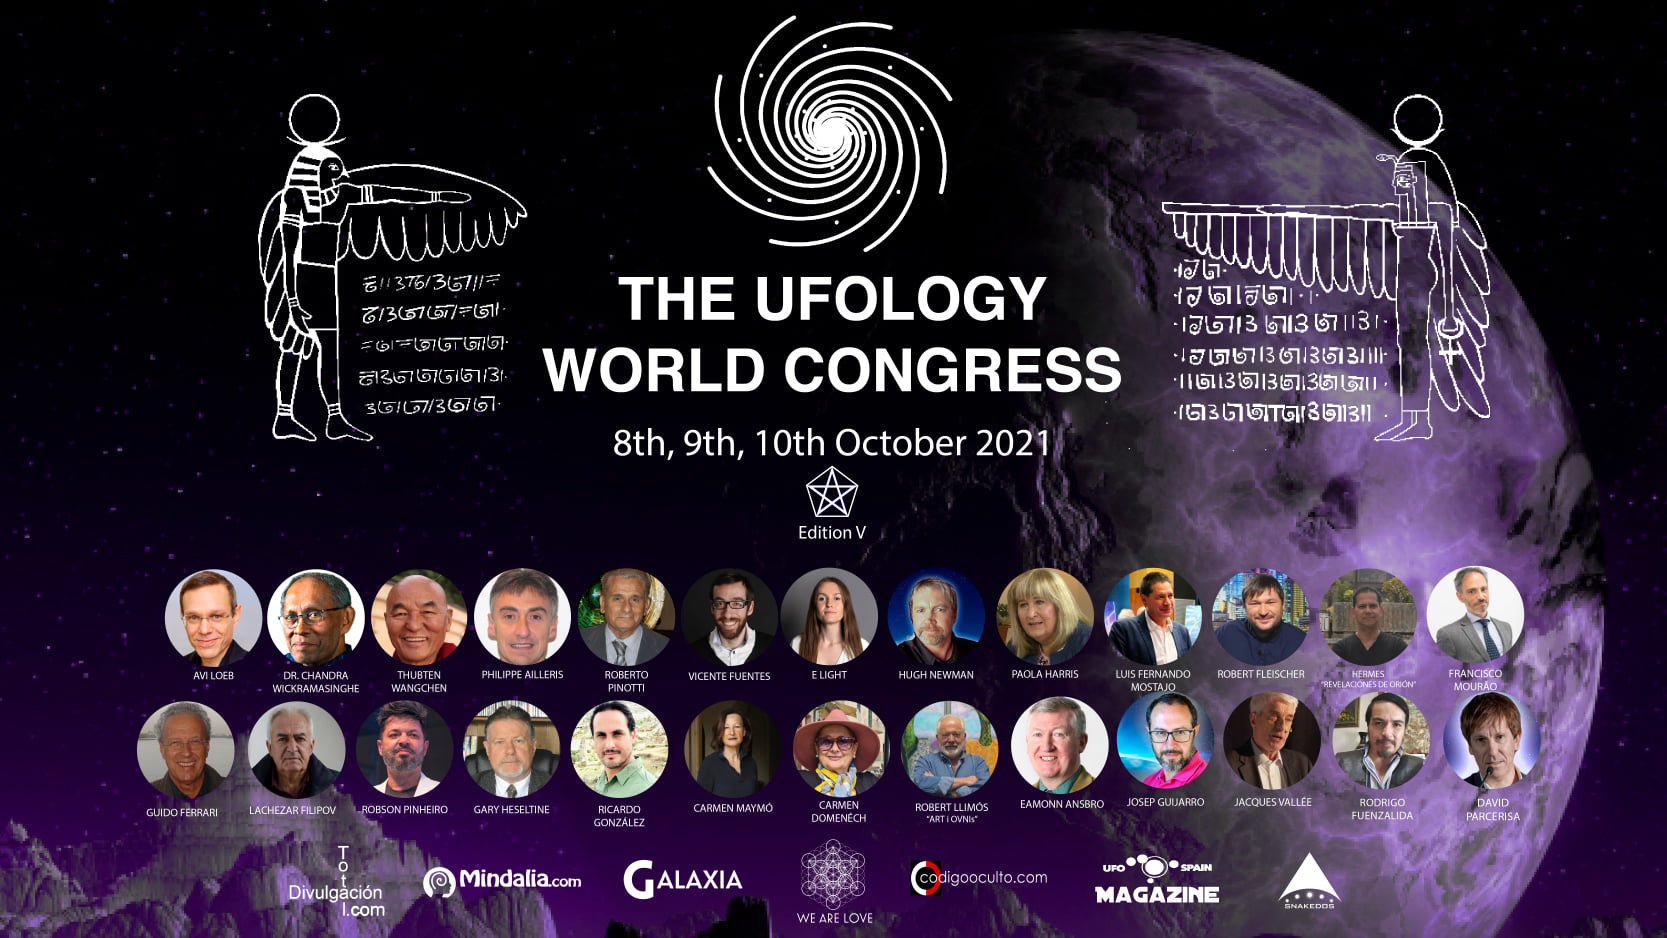 UFO World Congress 2021 - The World Congress of Ufology